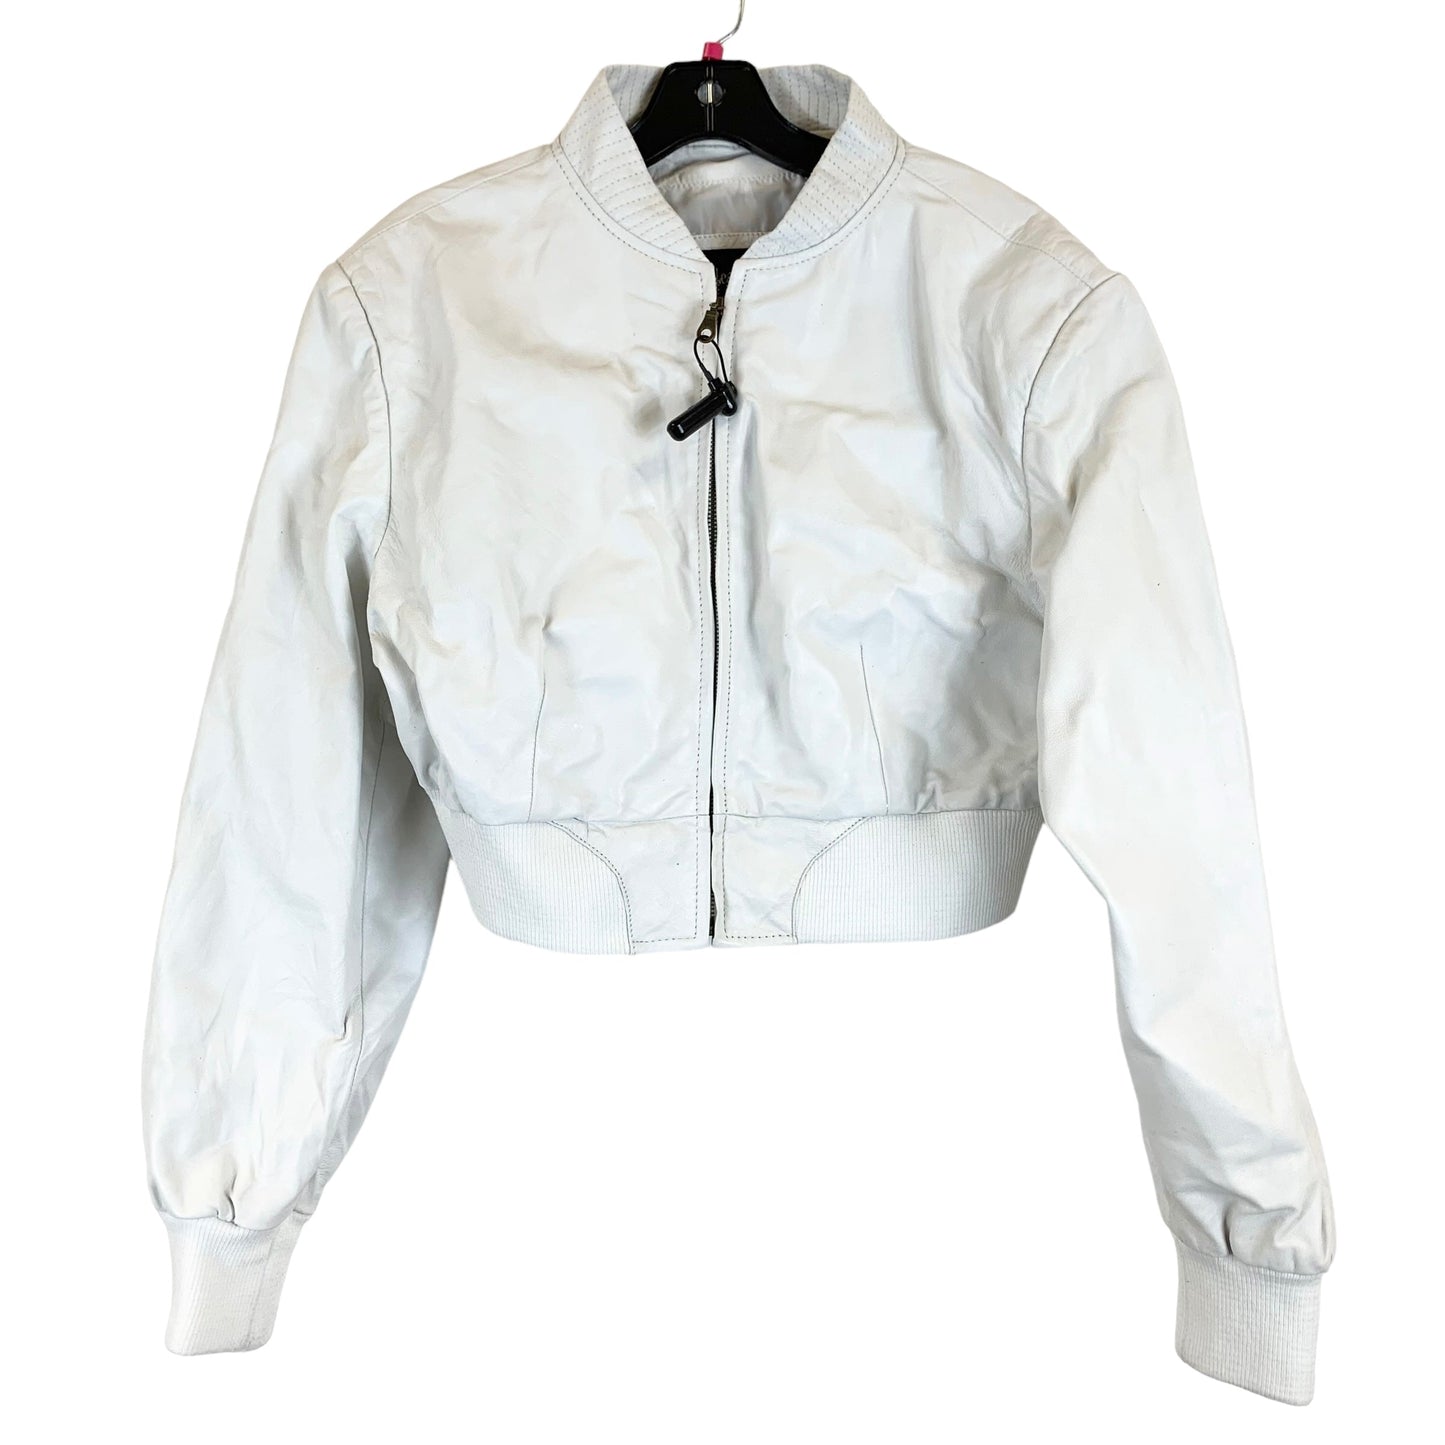 White Jacket Leather The Leather Company, Size Xxl